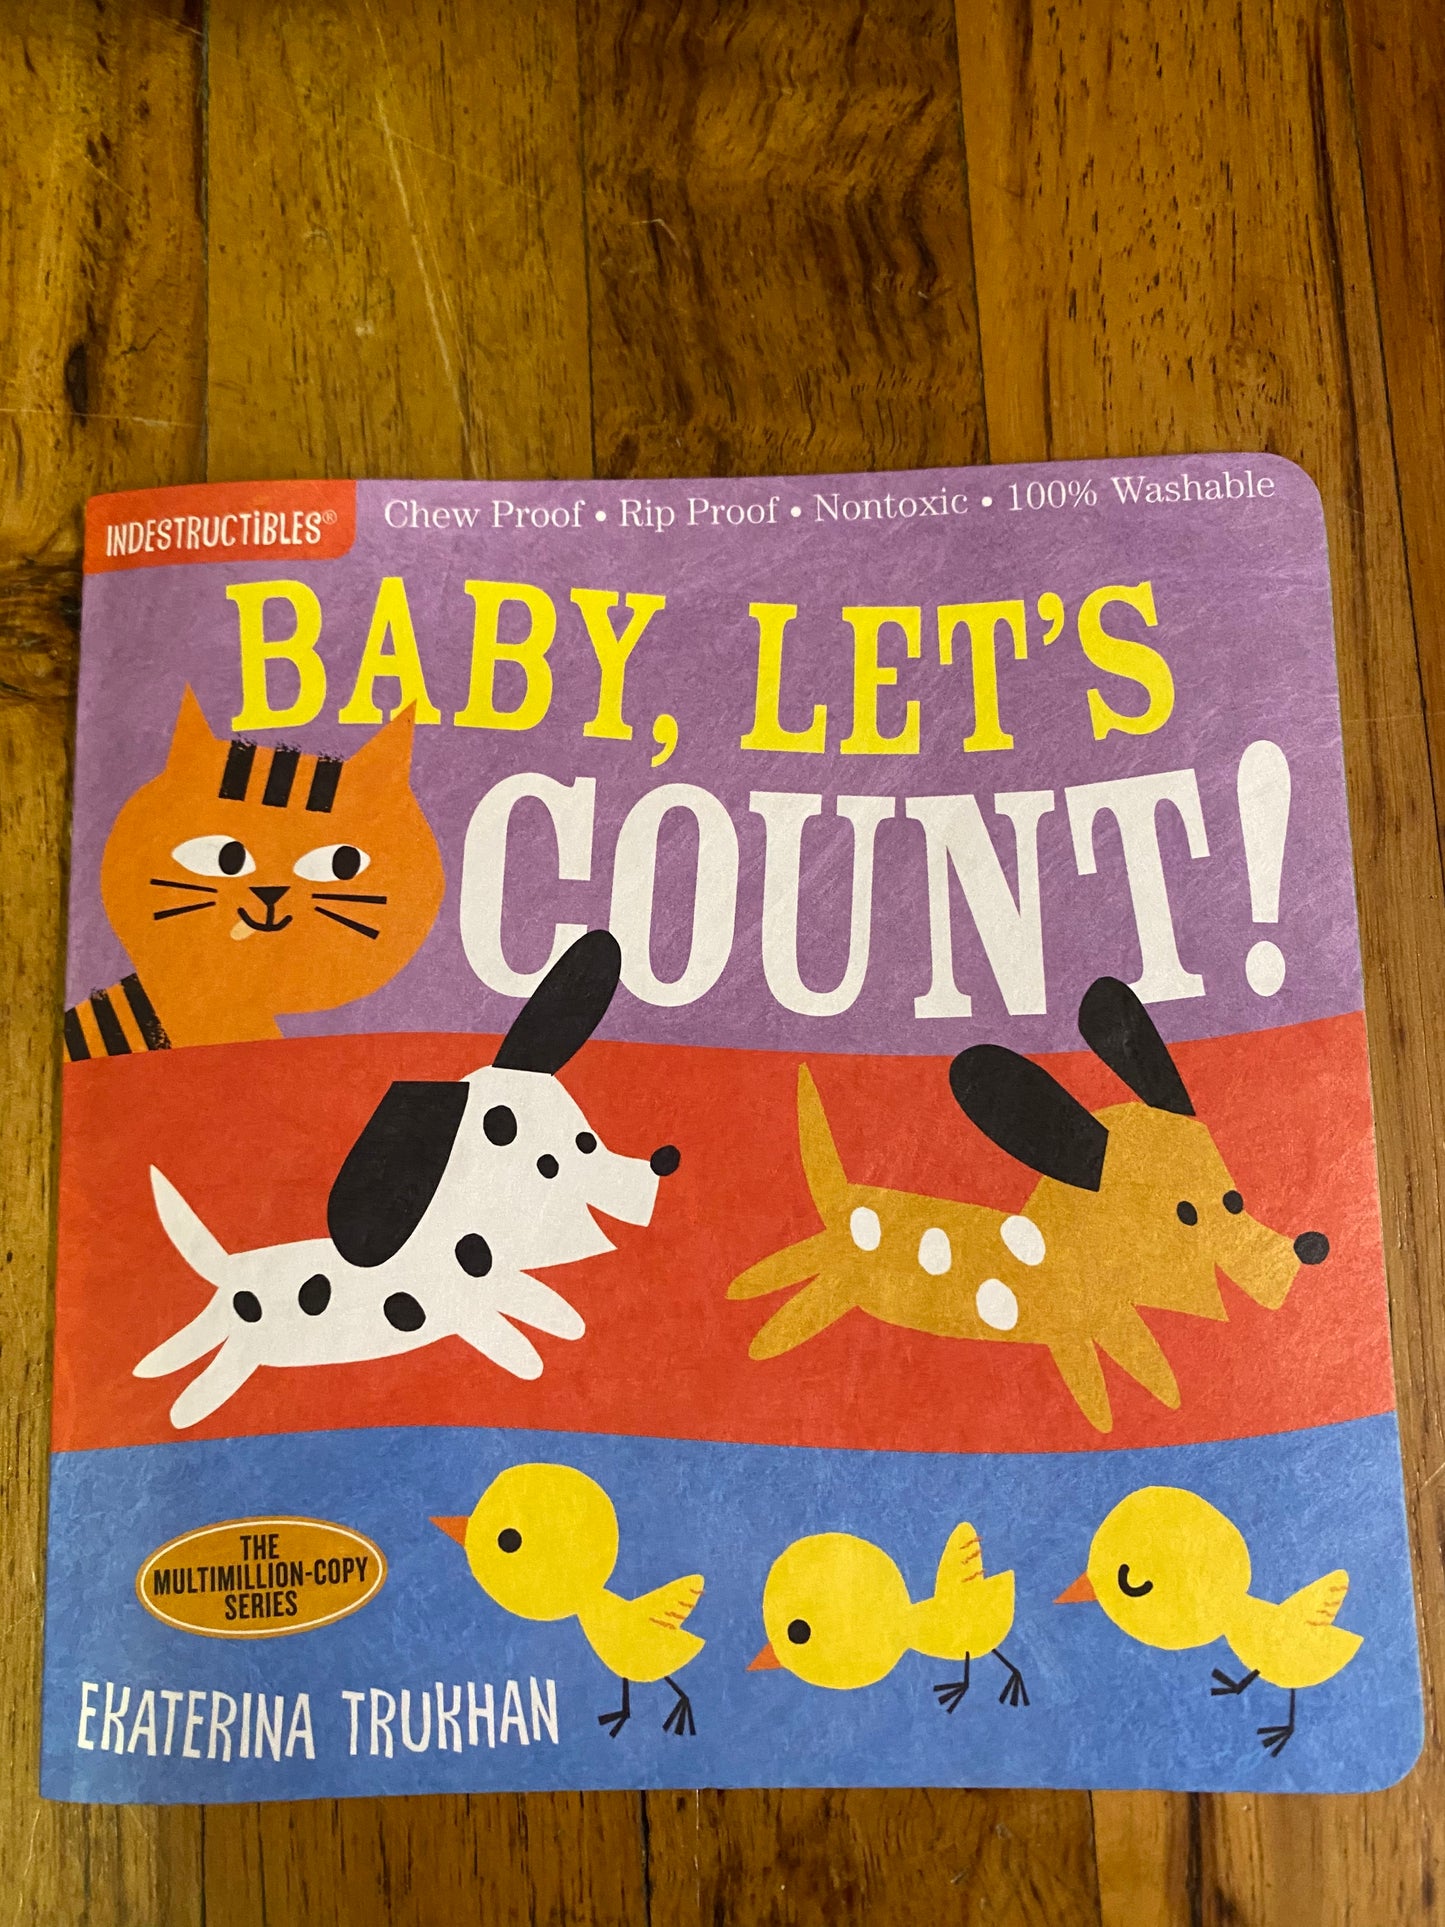 INDESTRUCTIBLES CHILDREN BOOK/BABY LETS COUNT